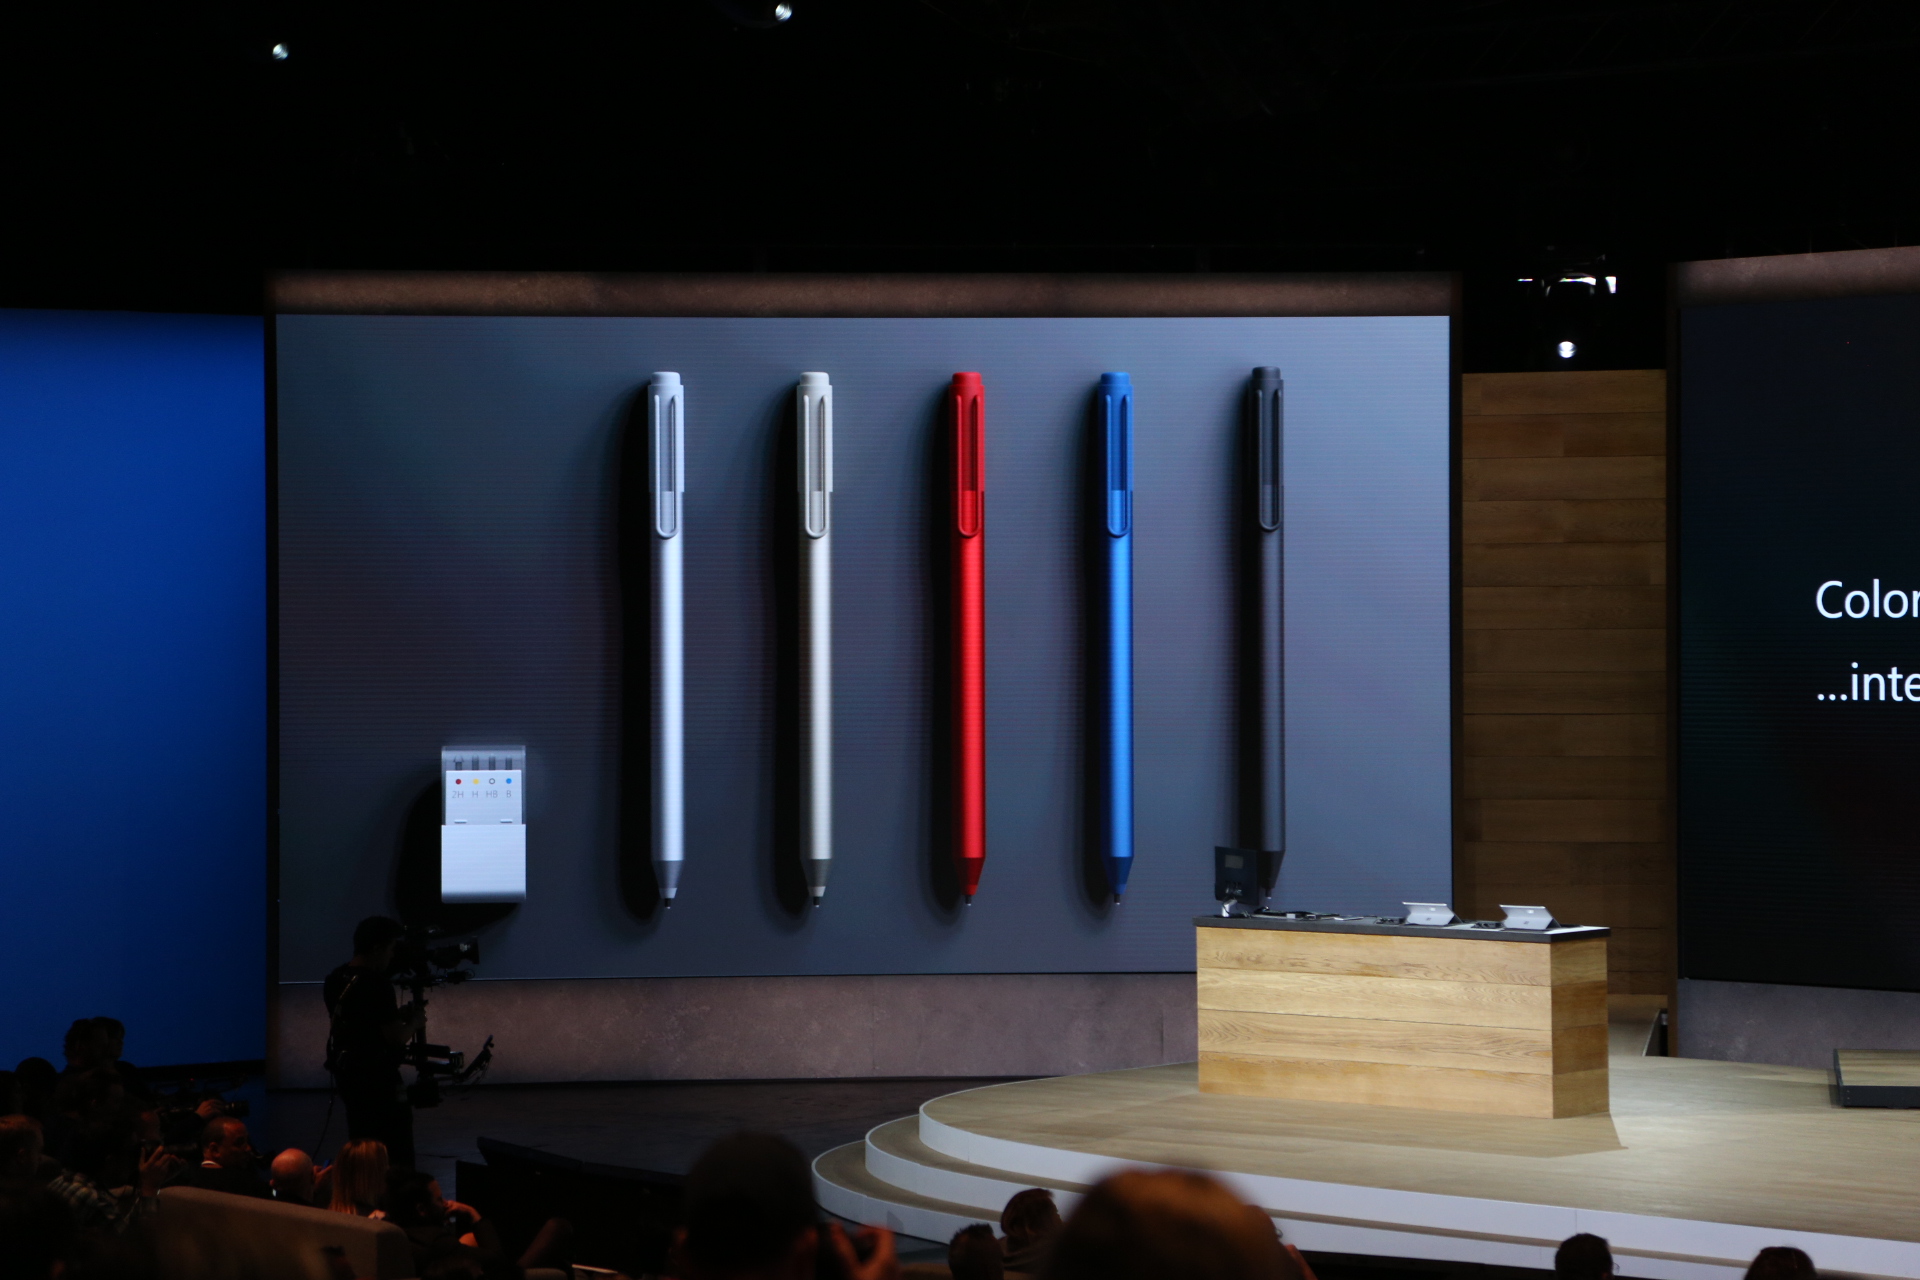 Microsoft Surface Pro 4: Bigger Screen, Faster Guts